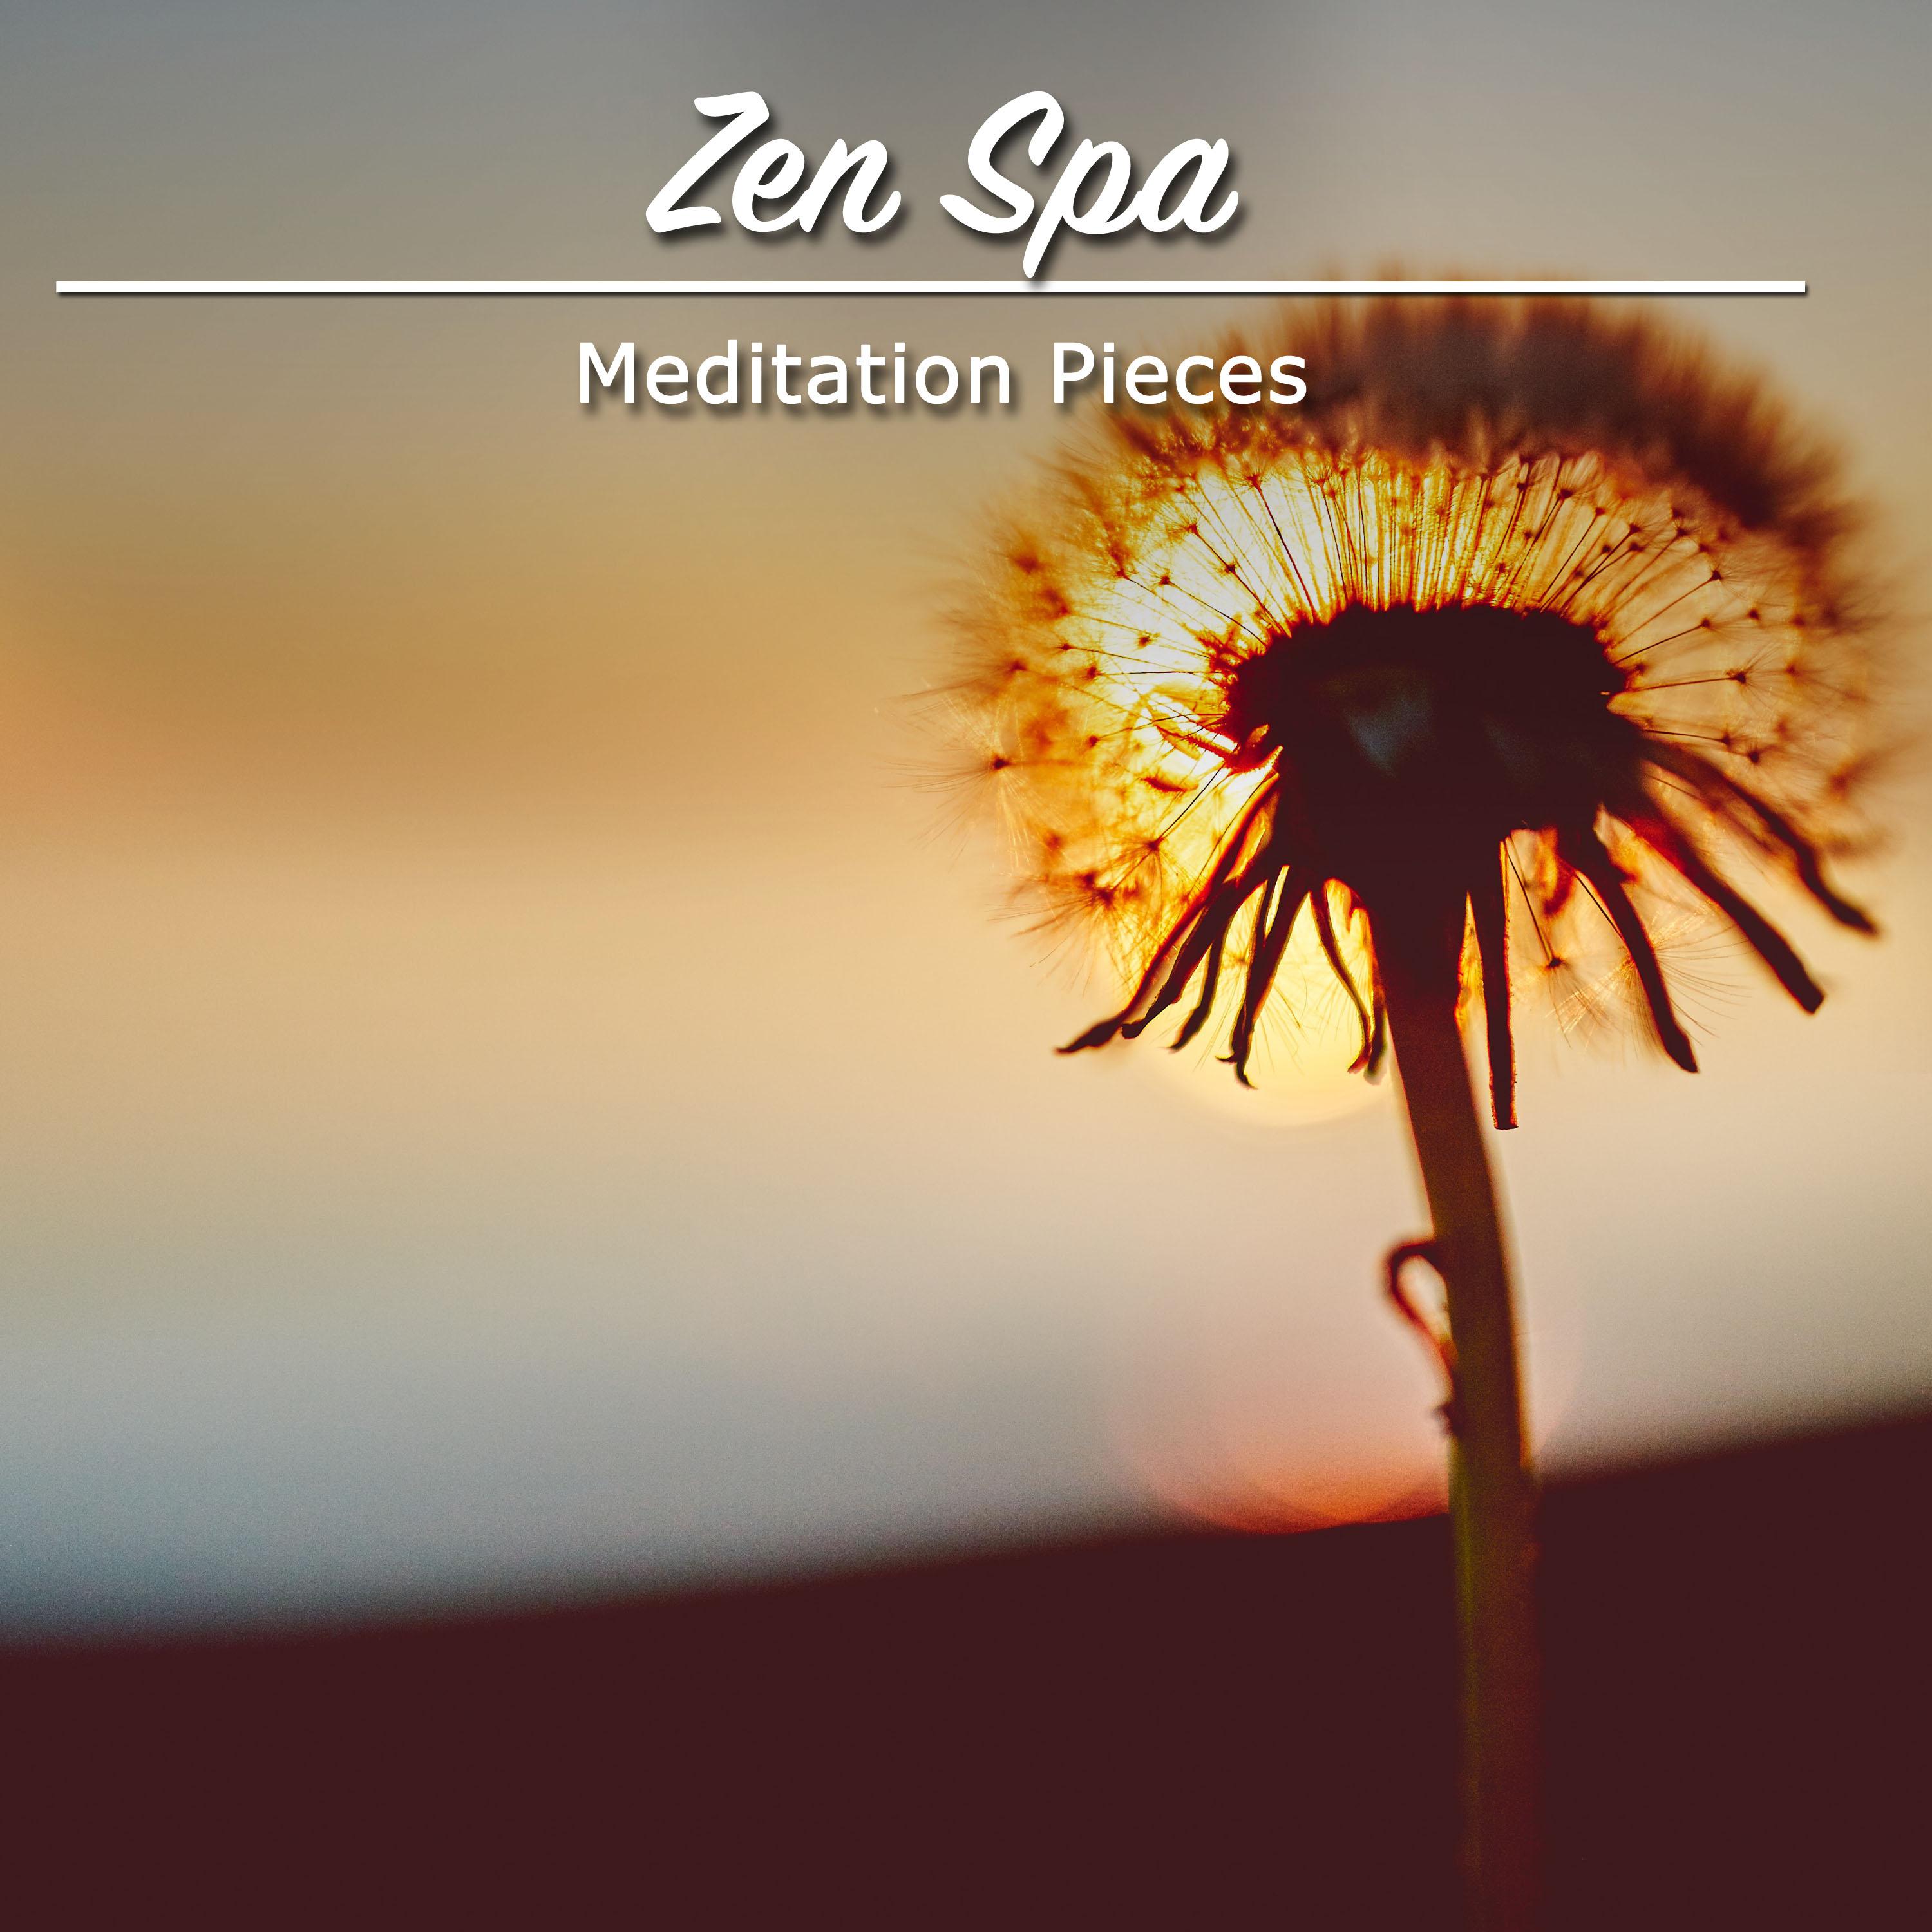 18 Zen Spa Meditation Pieces